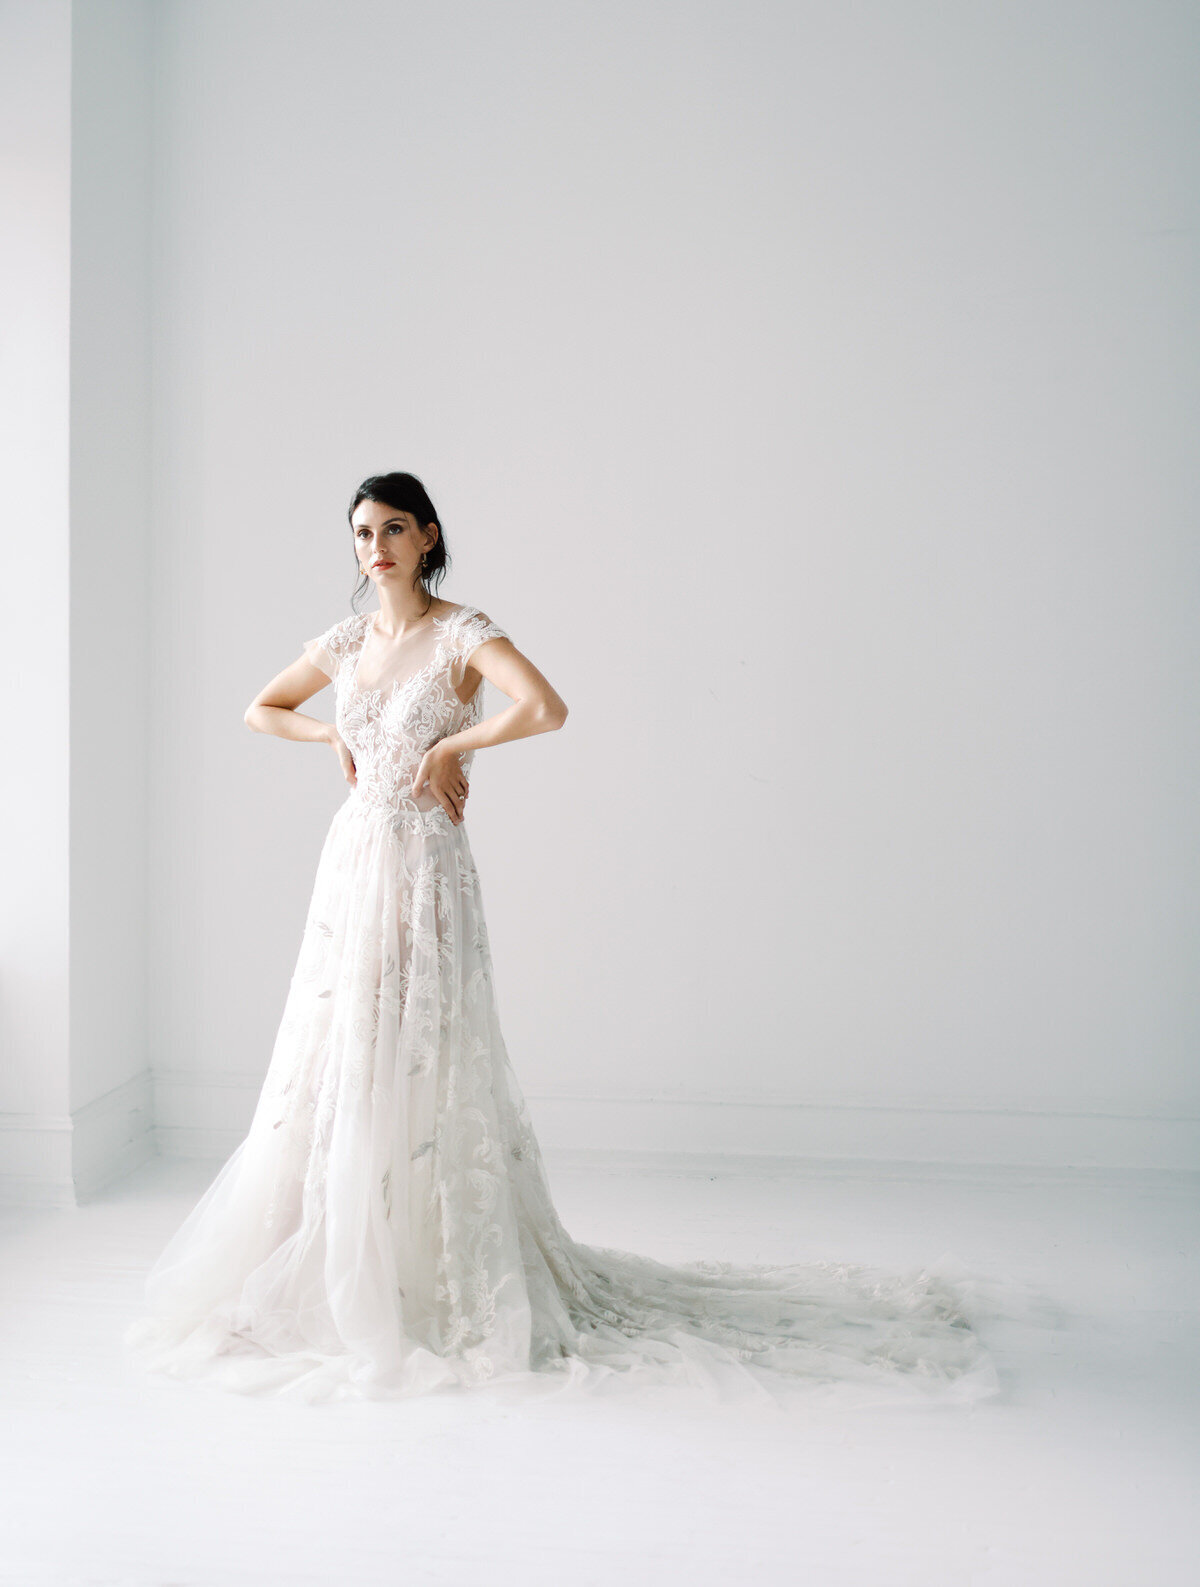 New York Bridal Fashion Week Editoridal Photography 10